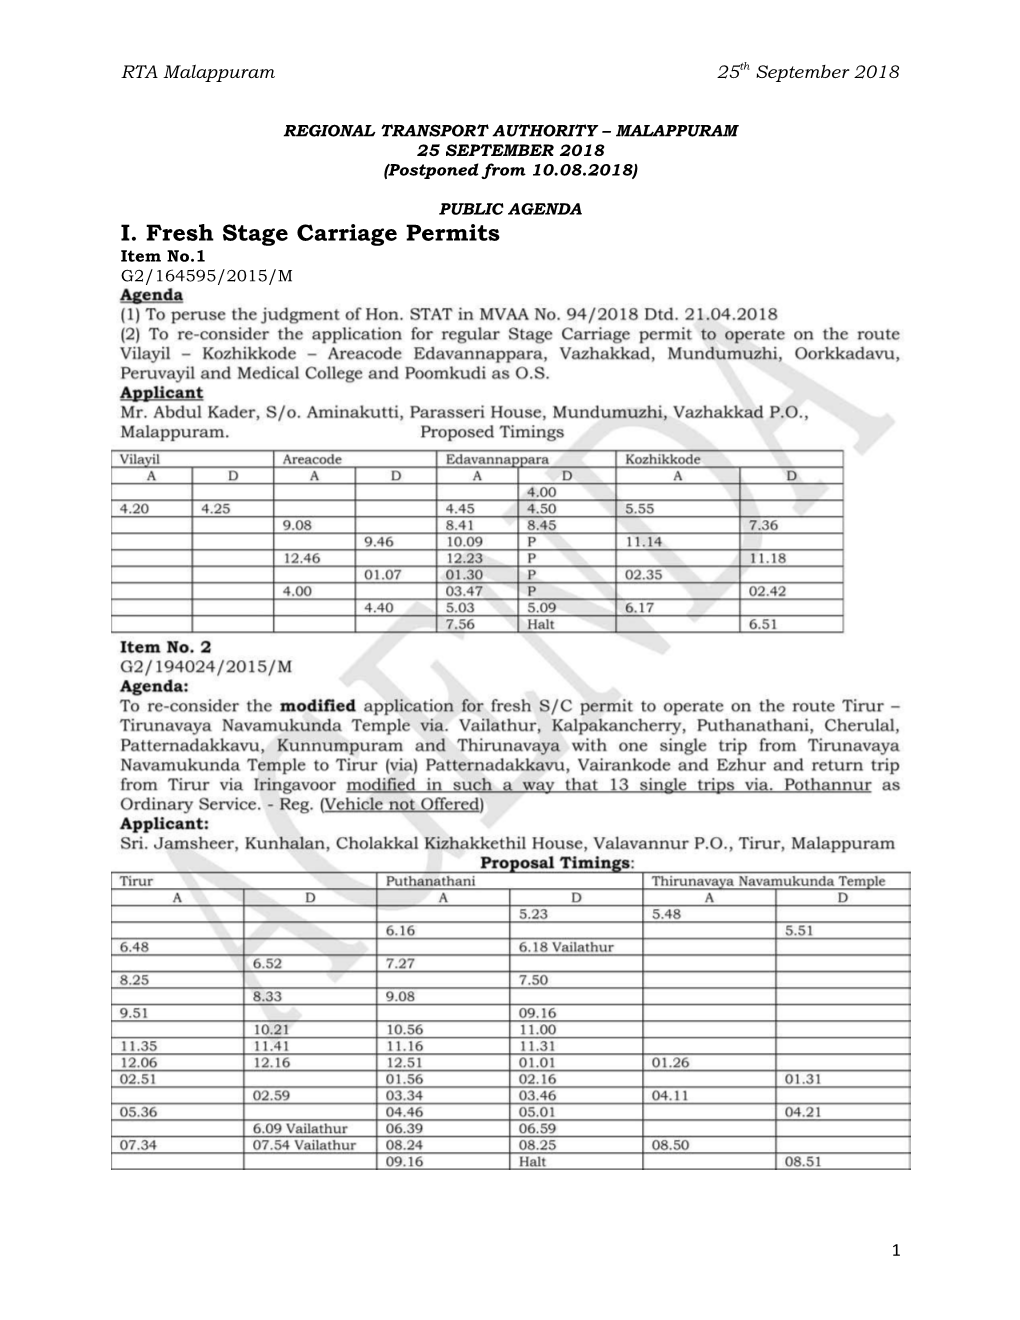 I. Fresh Stage Carriage Permits Item No.1 G2/164595/2015/M